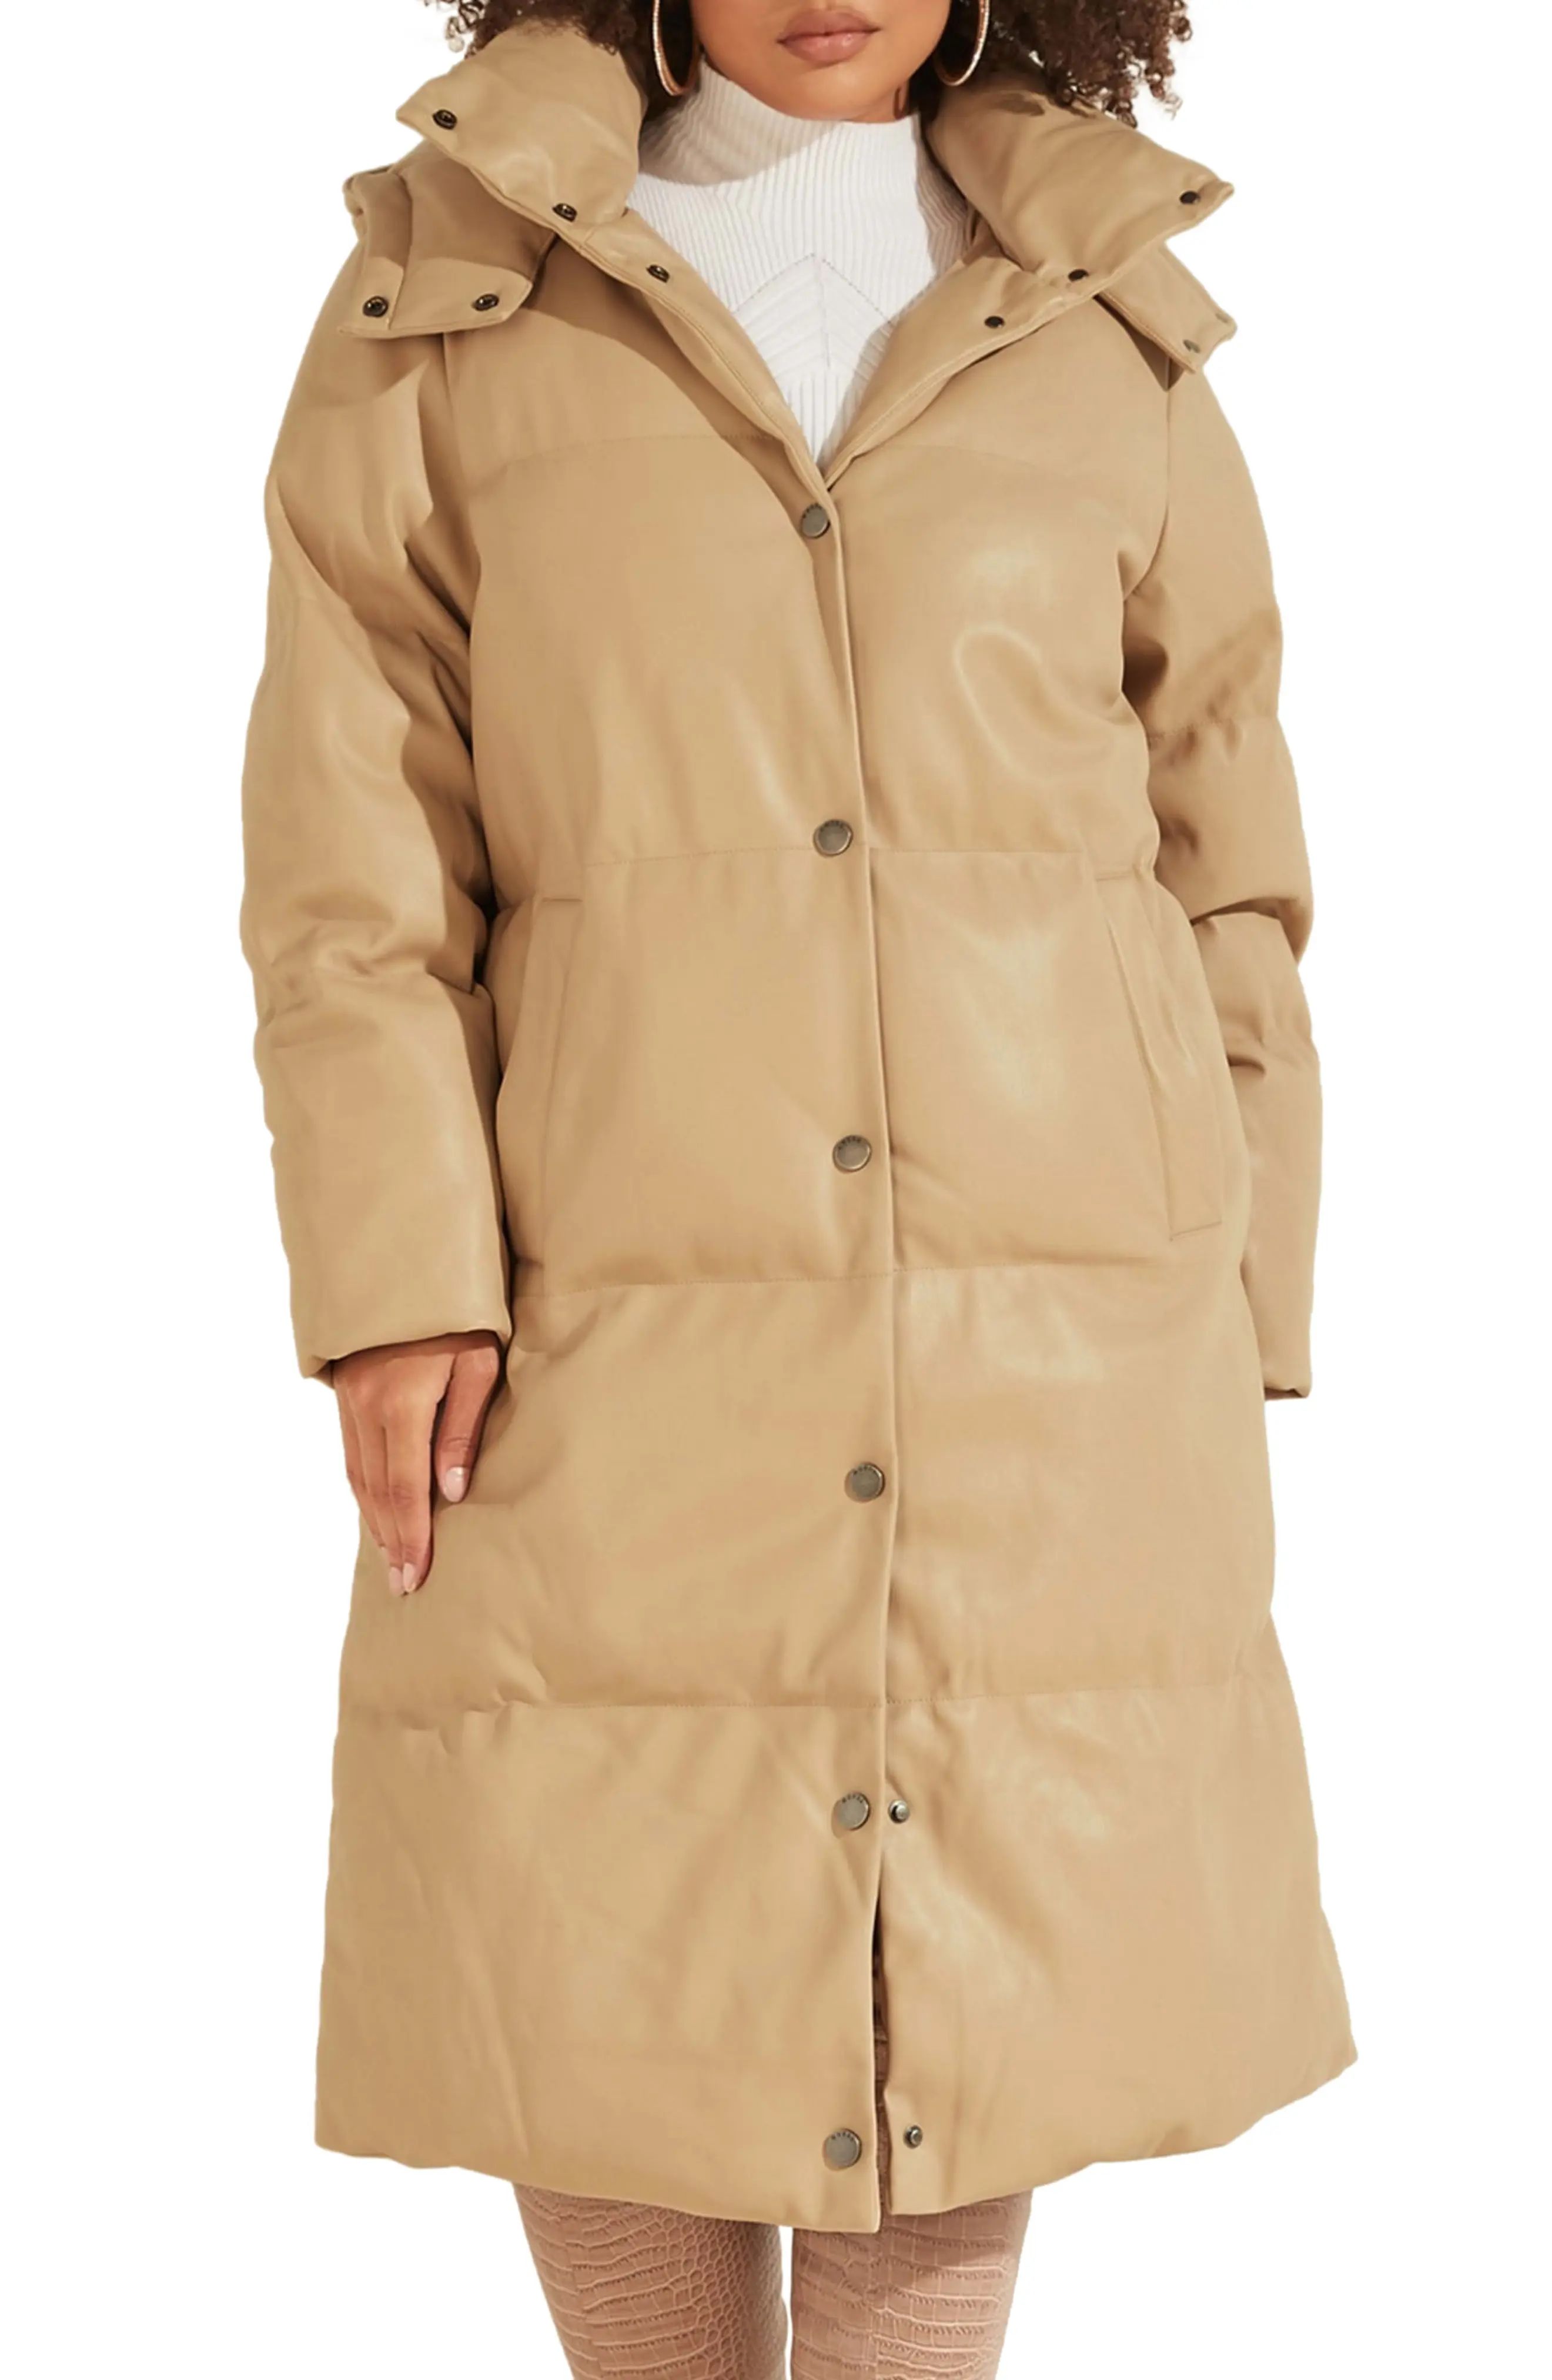 GUESS Emilie Long Hooded Puffer Jacket in Beige at Nordstrom, Size Medium | Nordstrom